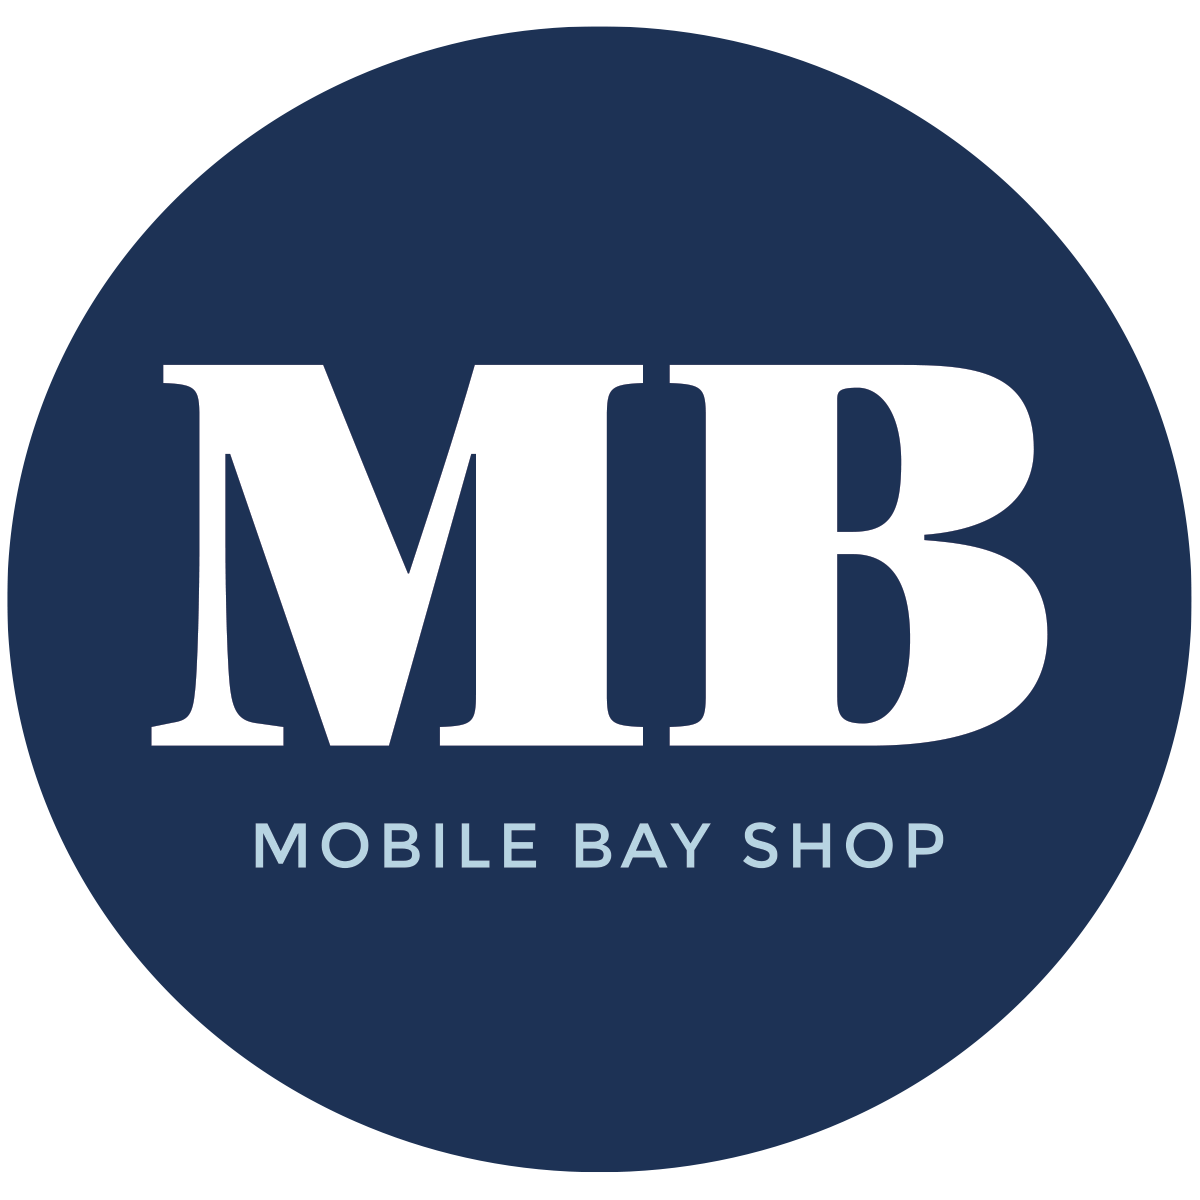 Mobile Bay Shop